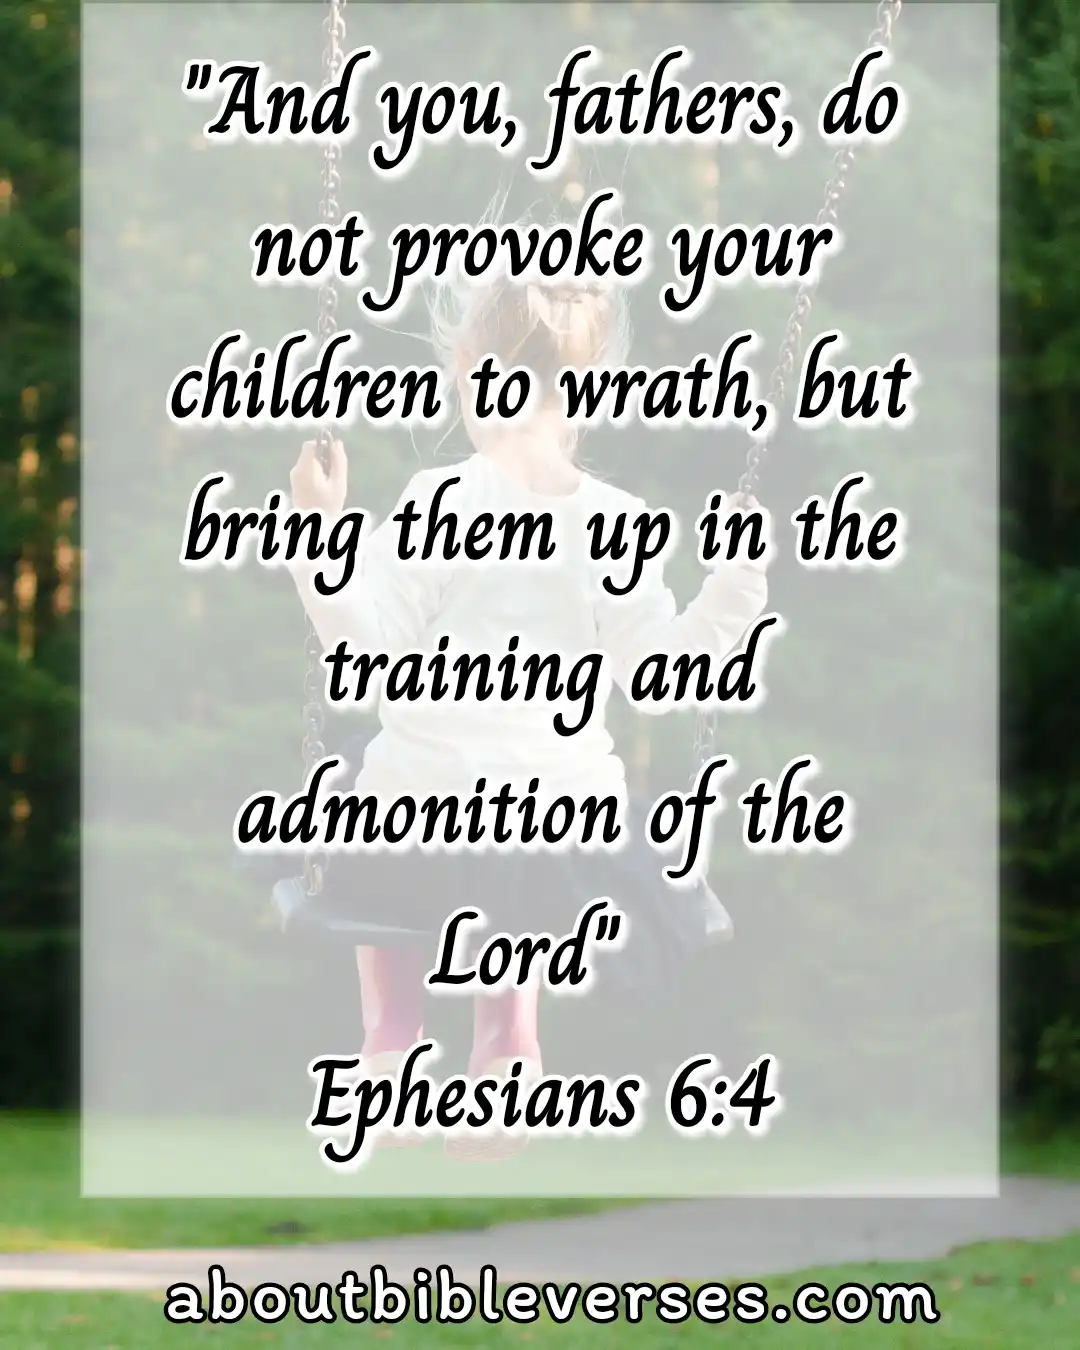 Bible Verses About Attitude Towards Others (Ephesians 6:4)